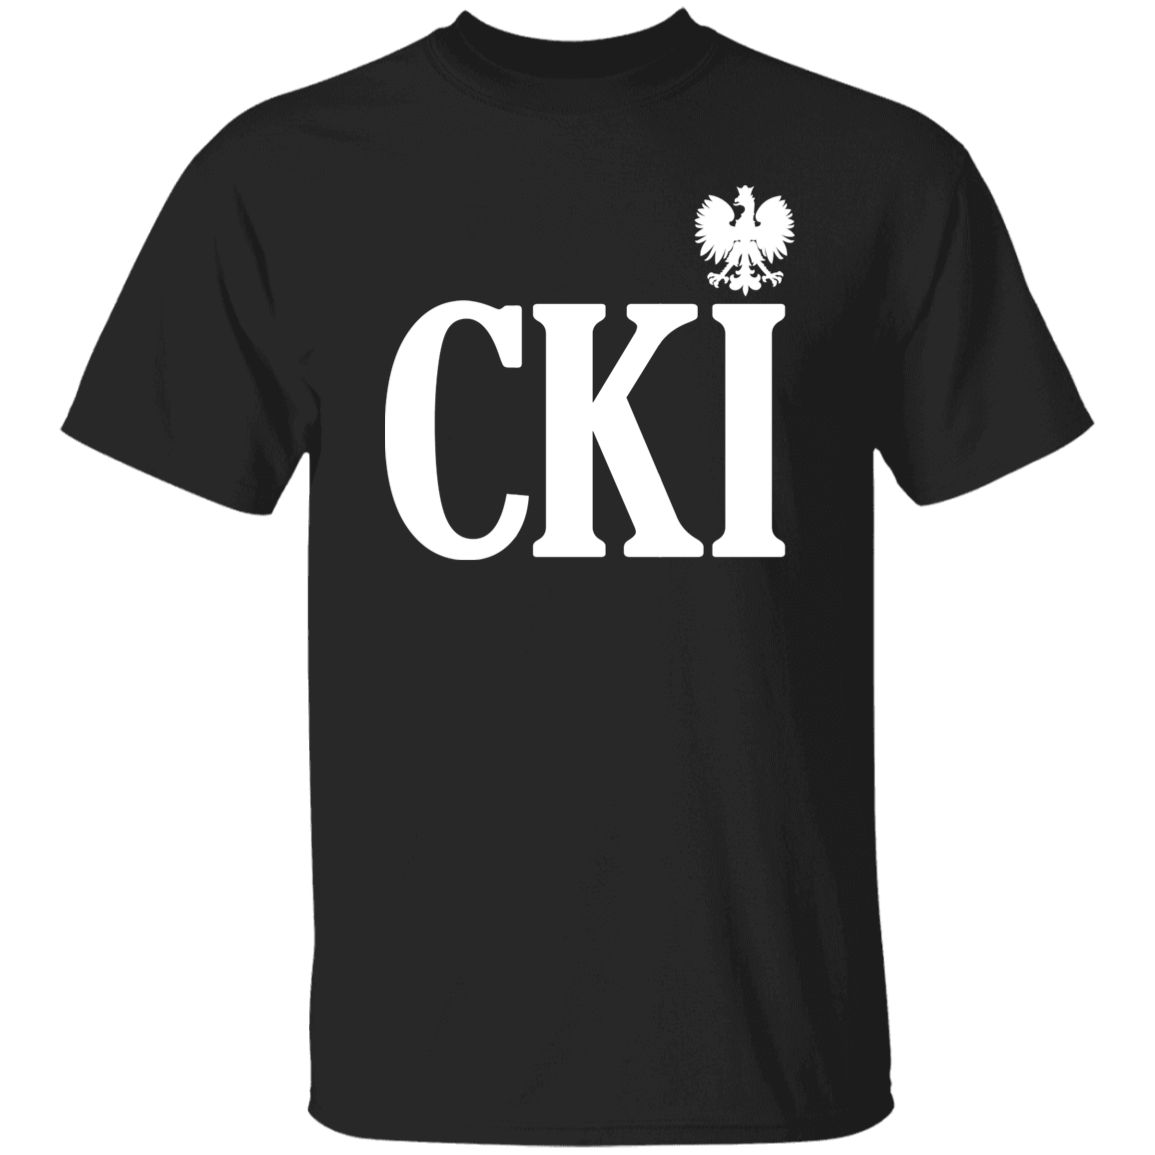 CKI Polish Surname Ending Apparel CustomCat G500 5.3 oz. T-Shirt Black S